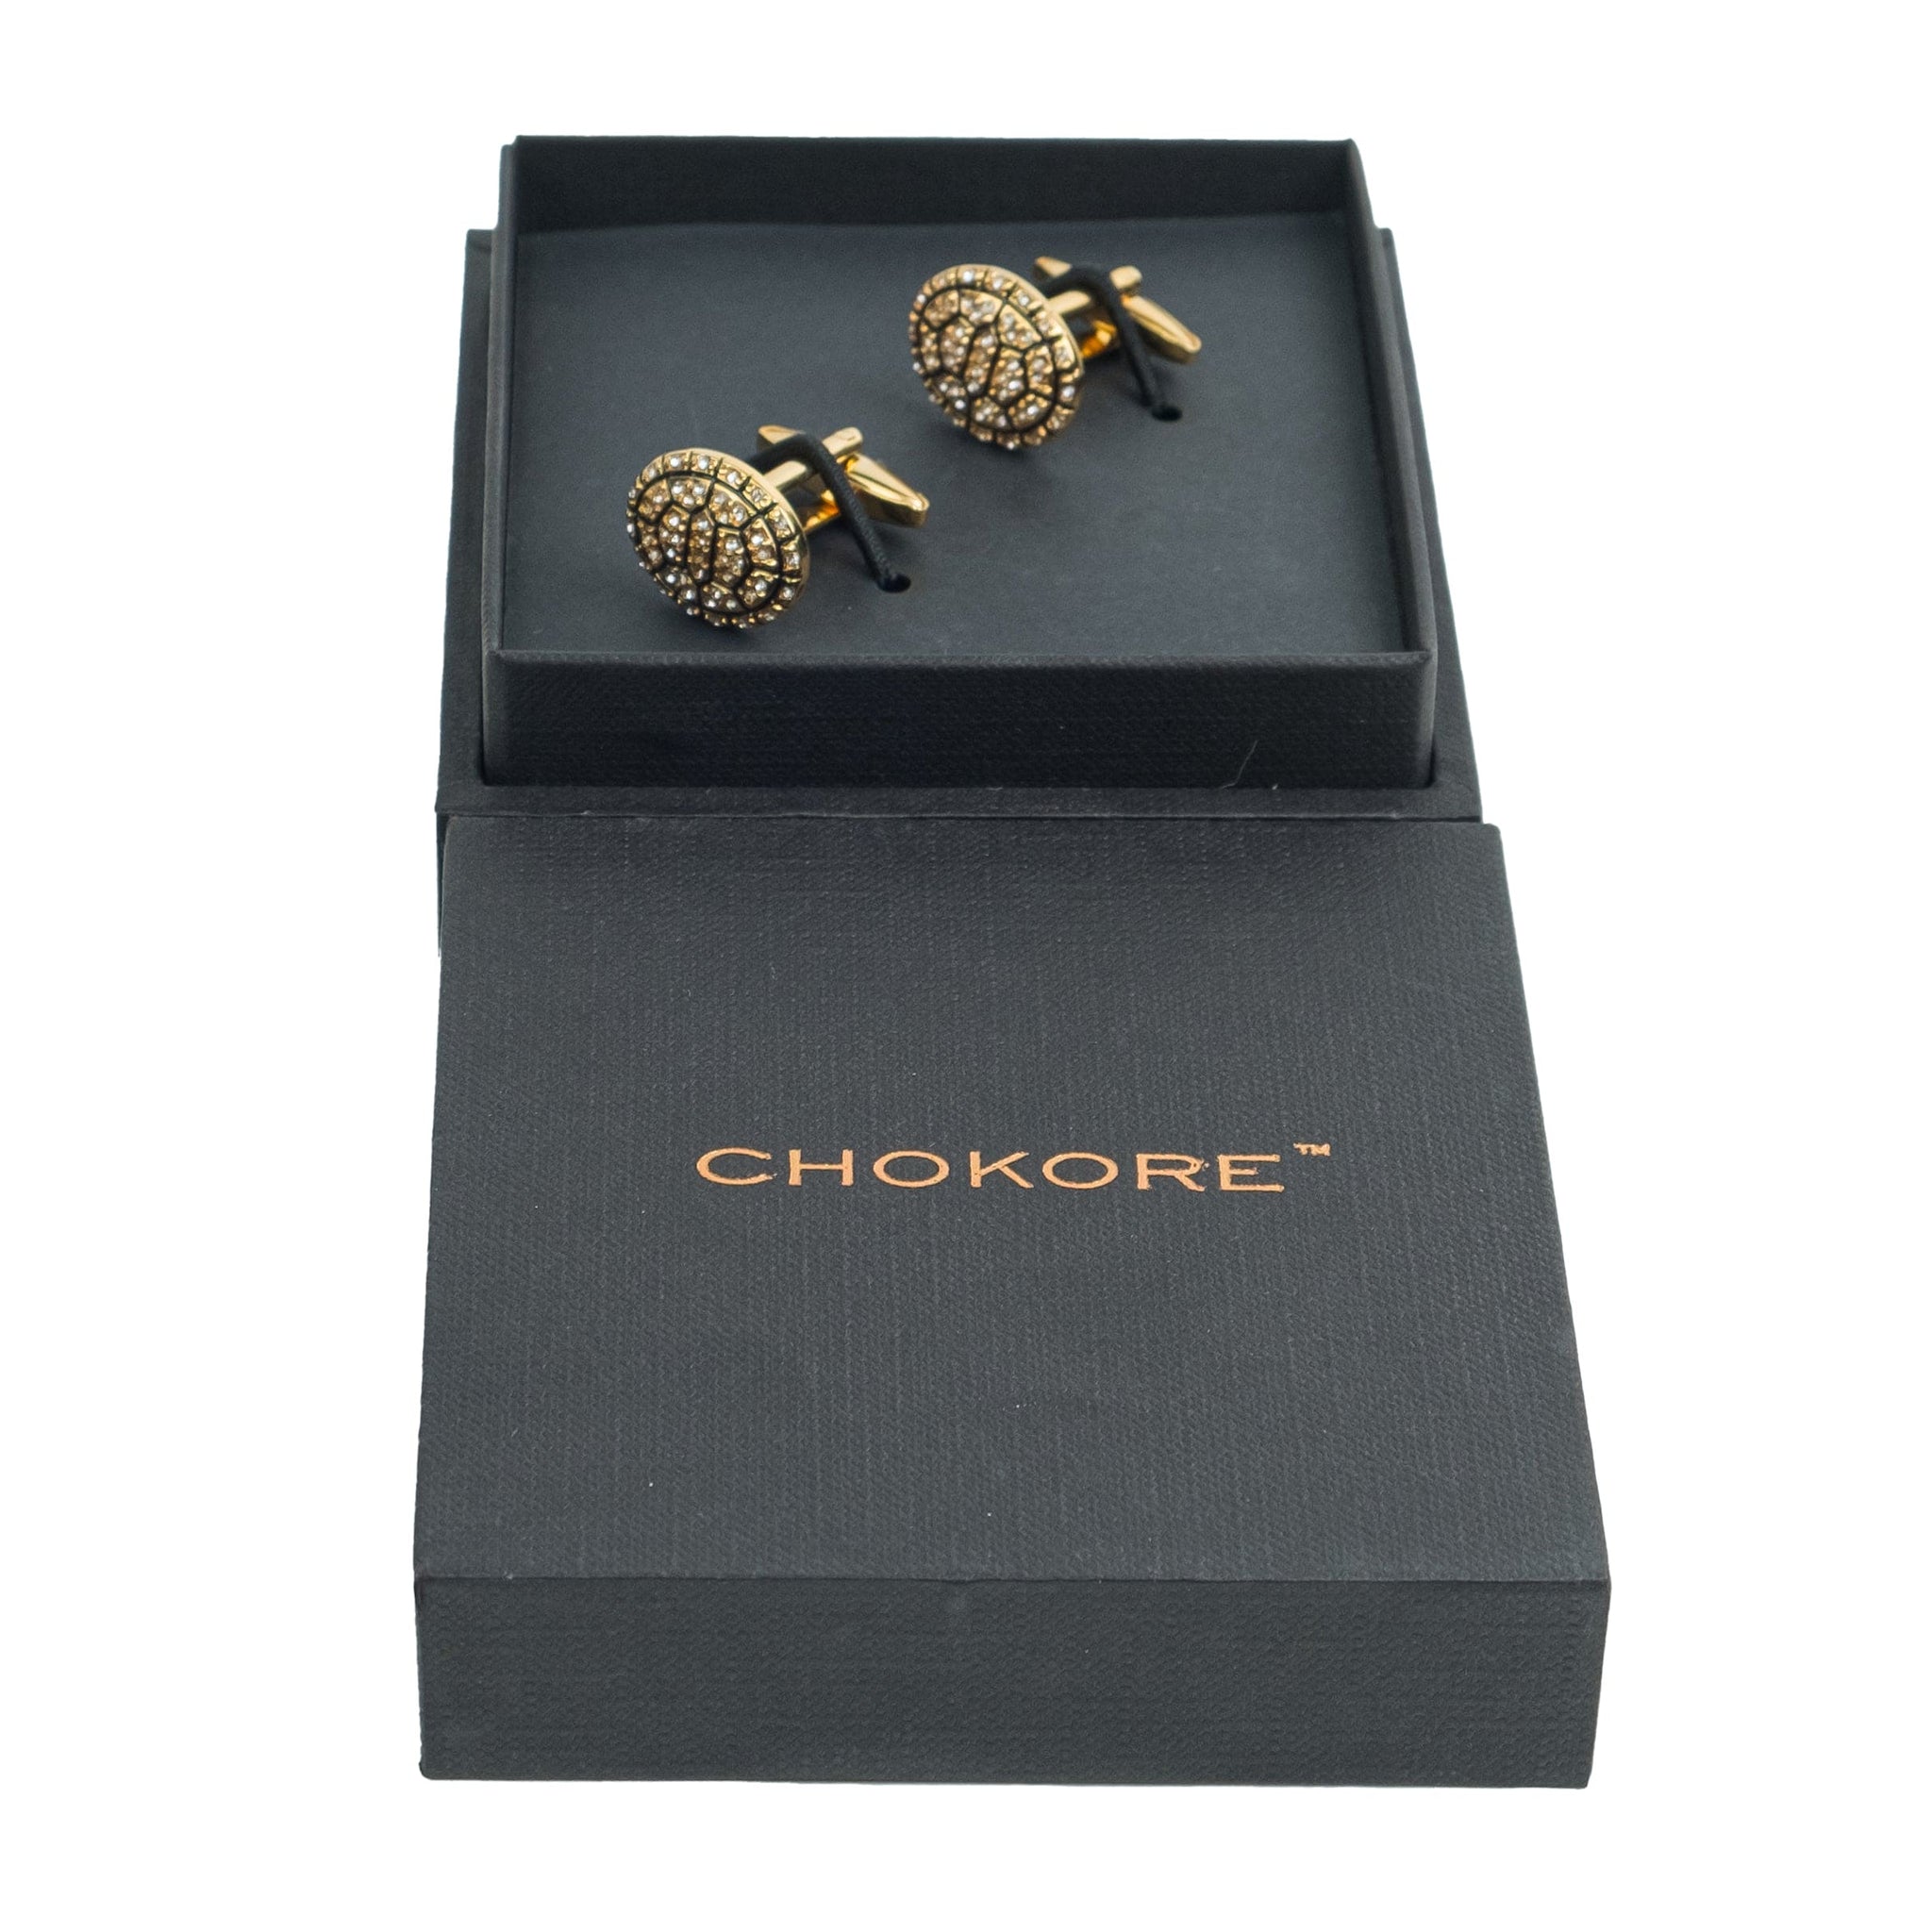 Chokore Tortoise Shell Crystal Cufflinks